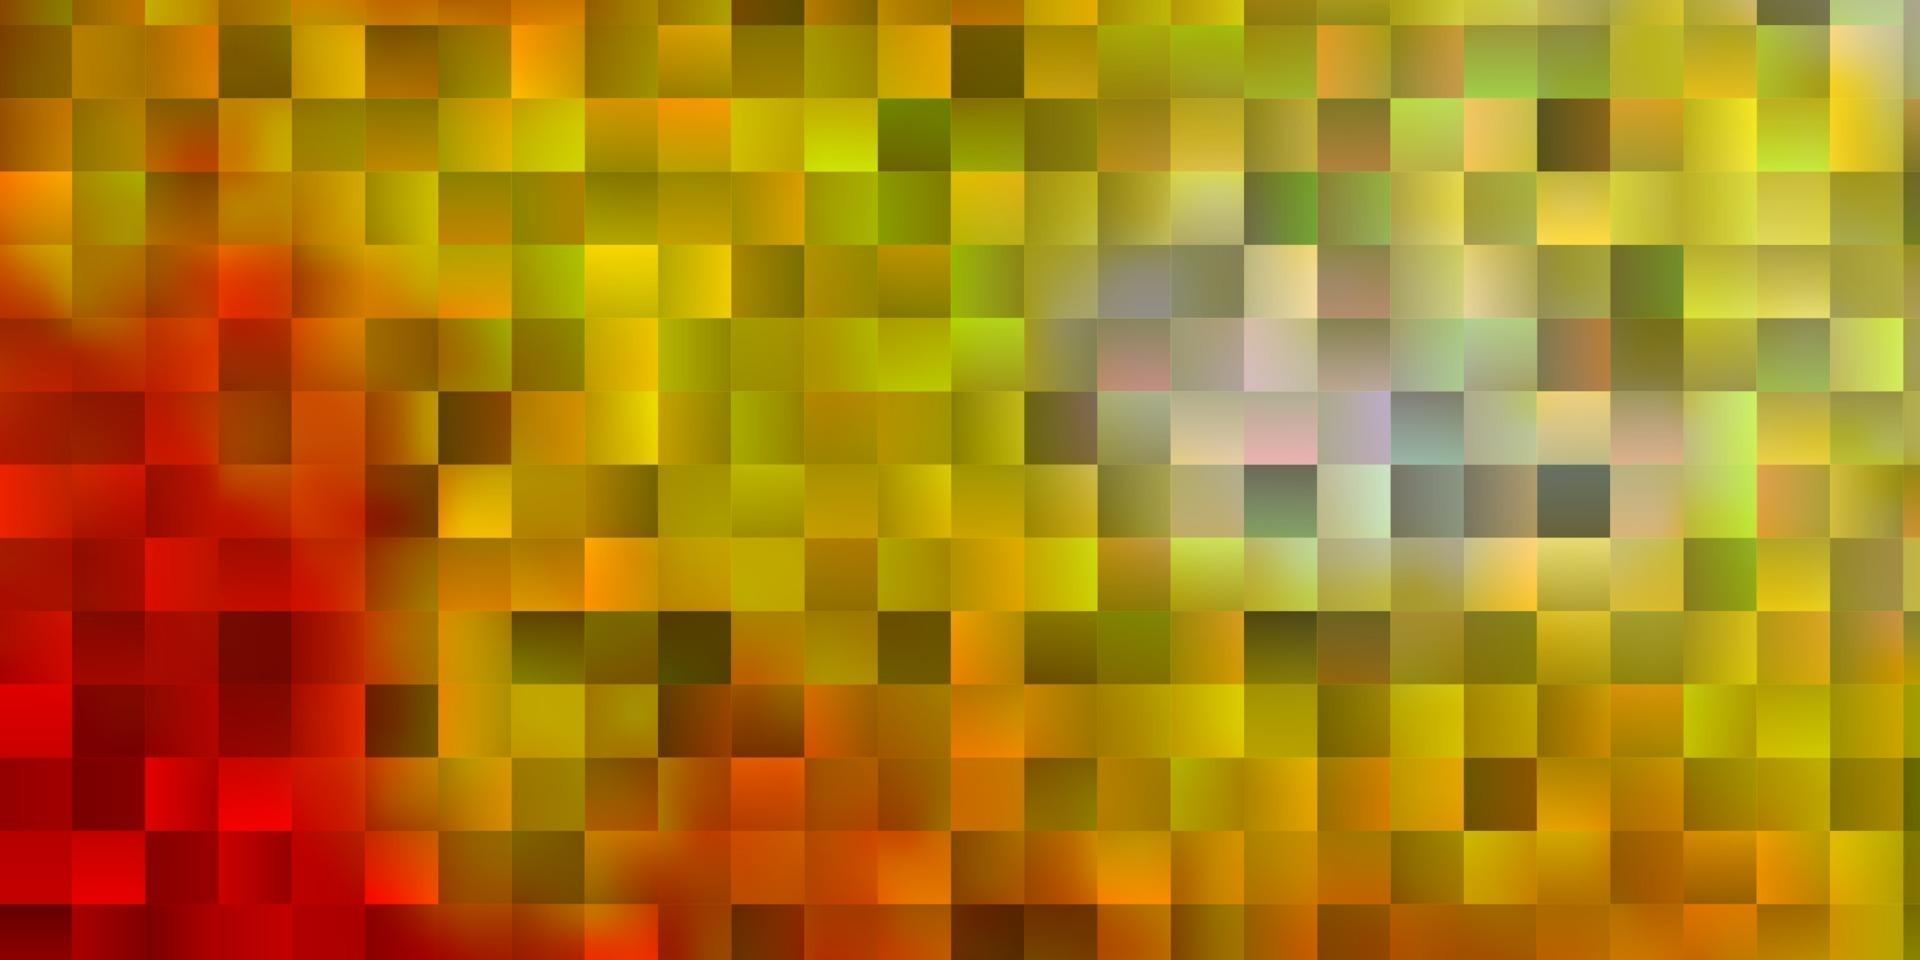 ljus orange vektor bakgrund med rektanglar.